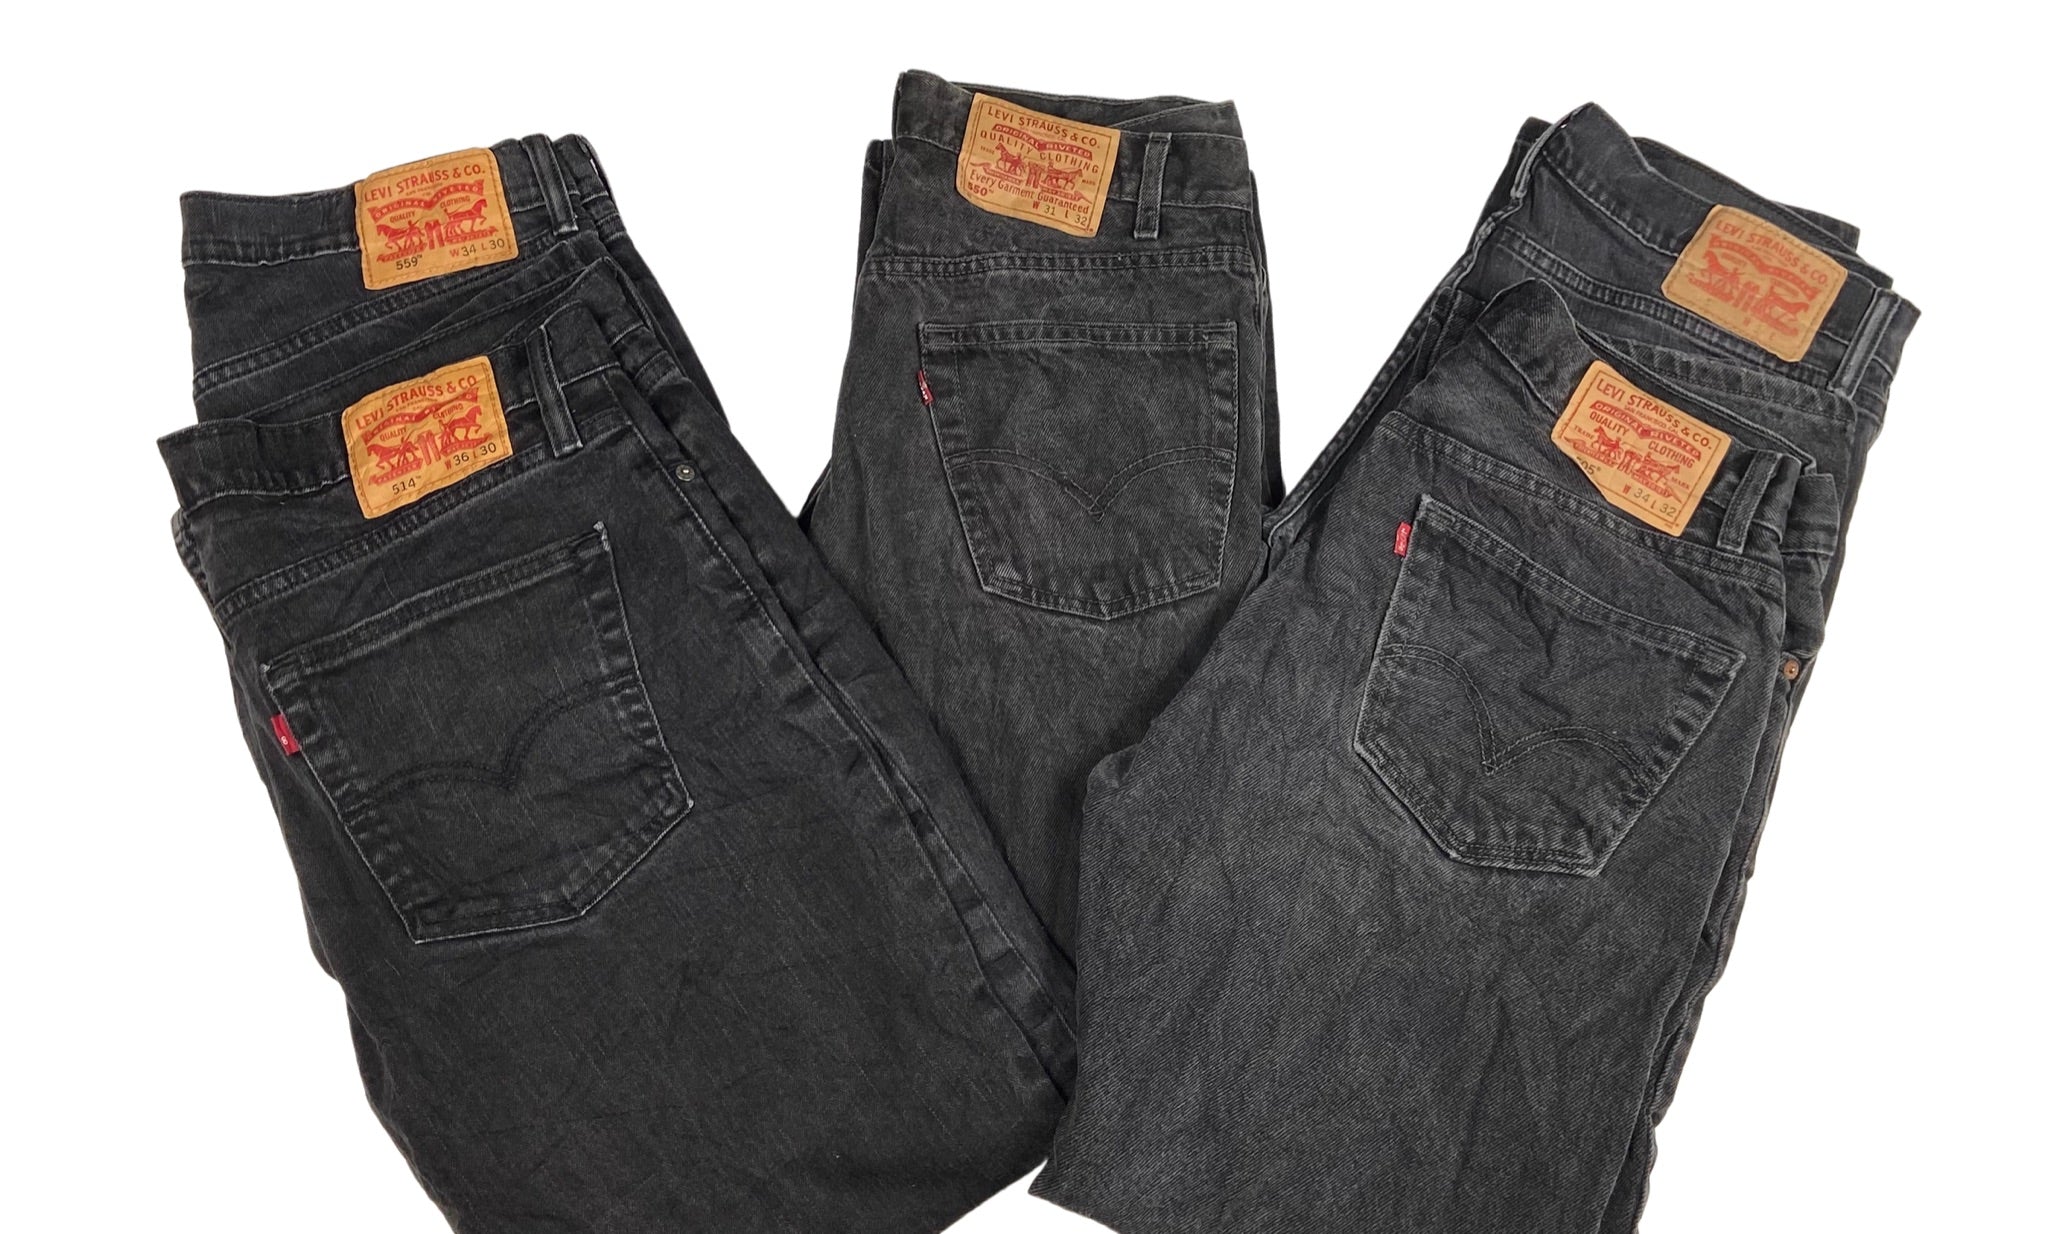 4 Pack Of Black LEVI'S | 511 Slim Fit | Zip Fly Jeans - Waist 29 - Length 30